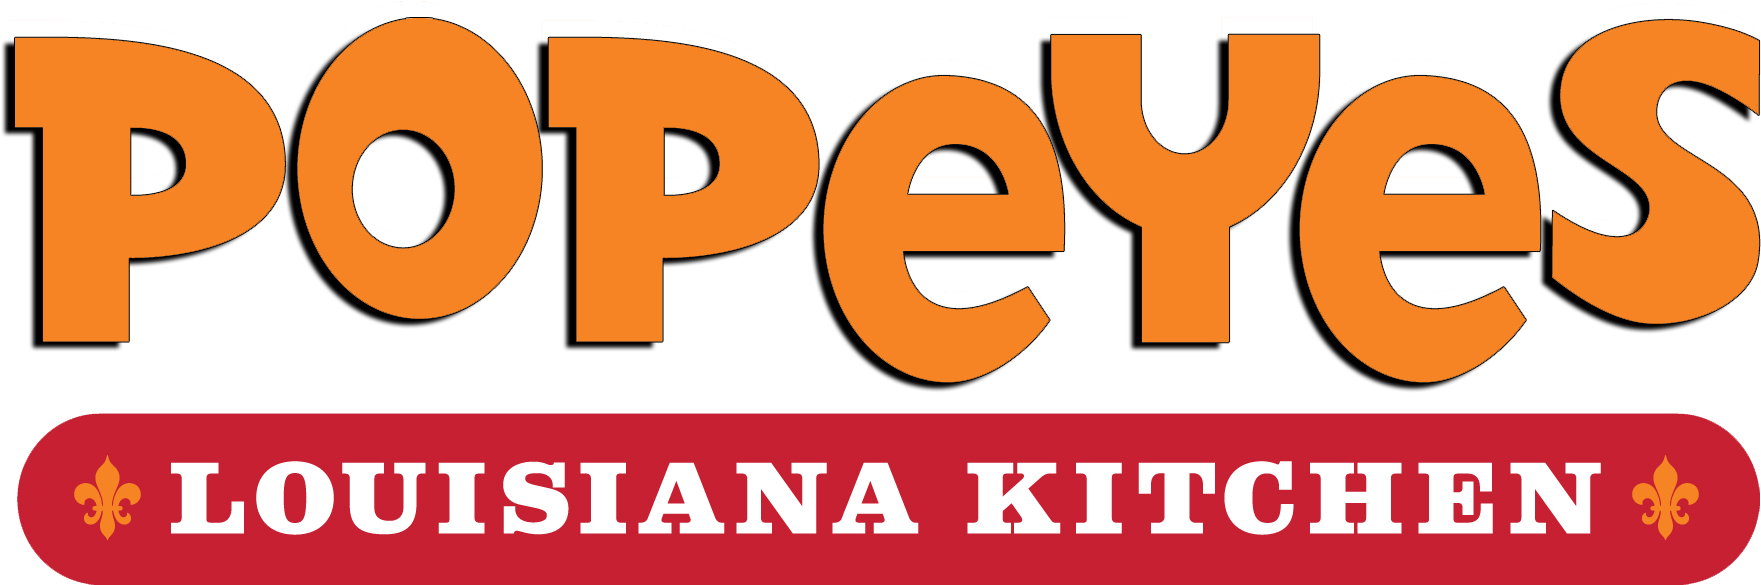 popeyes-louisiana-kitchen-logo.png